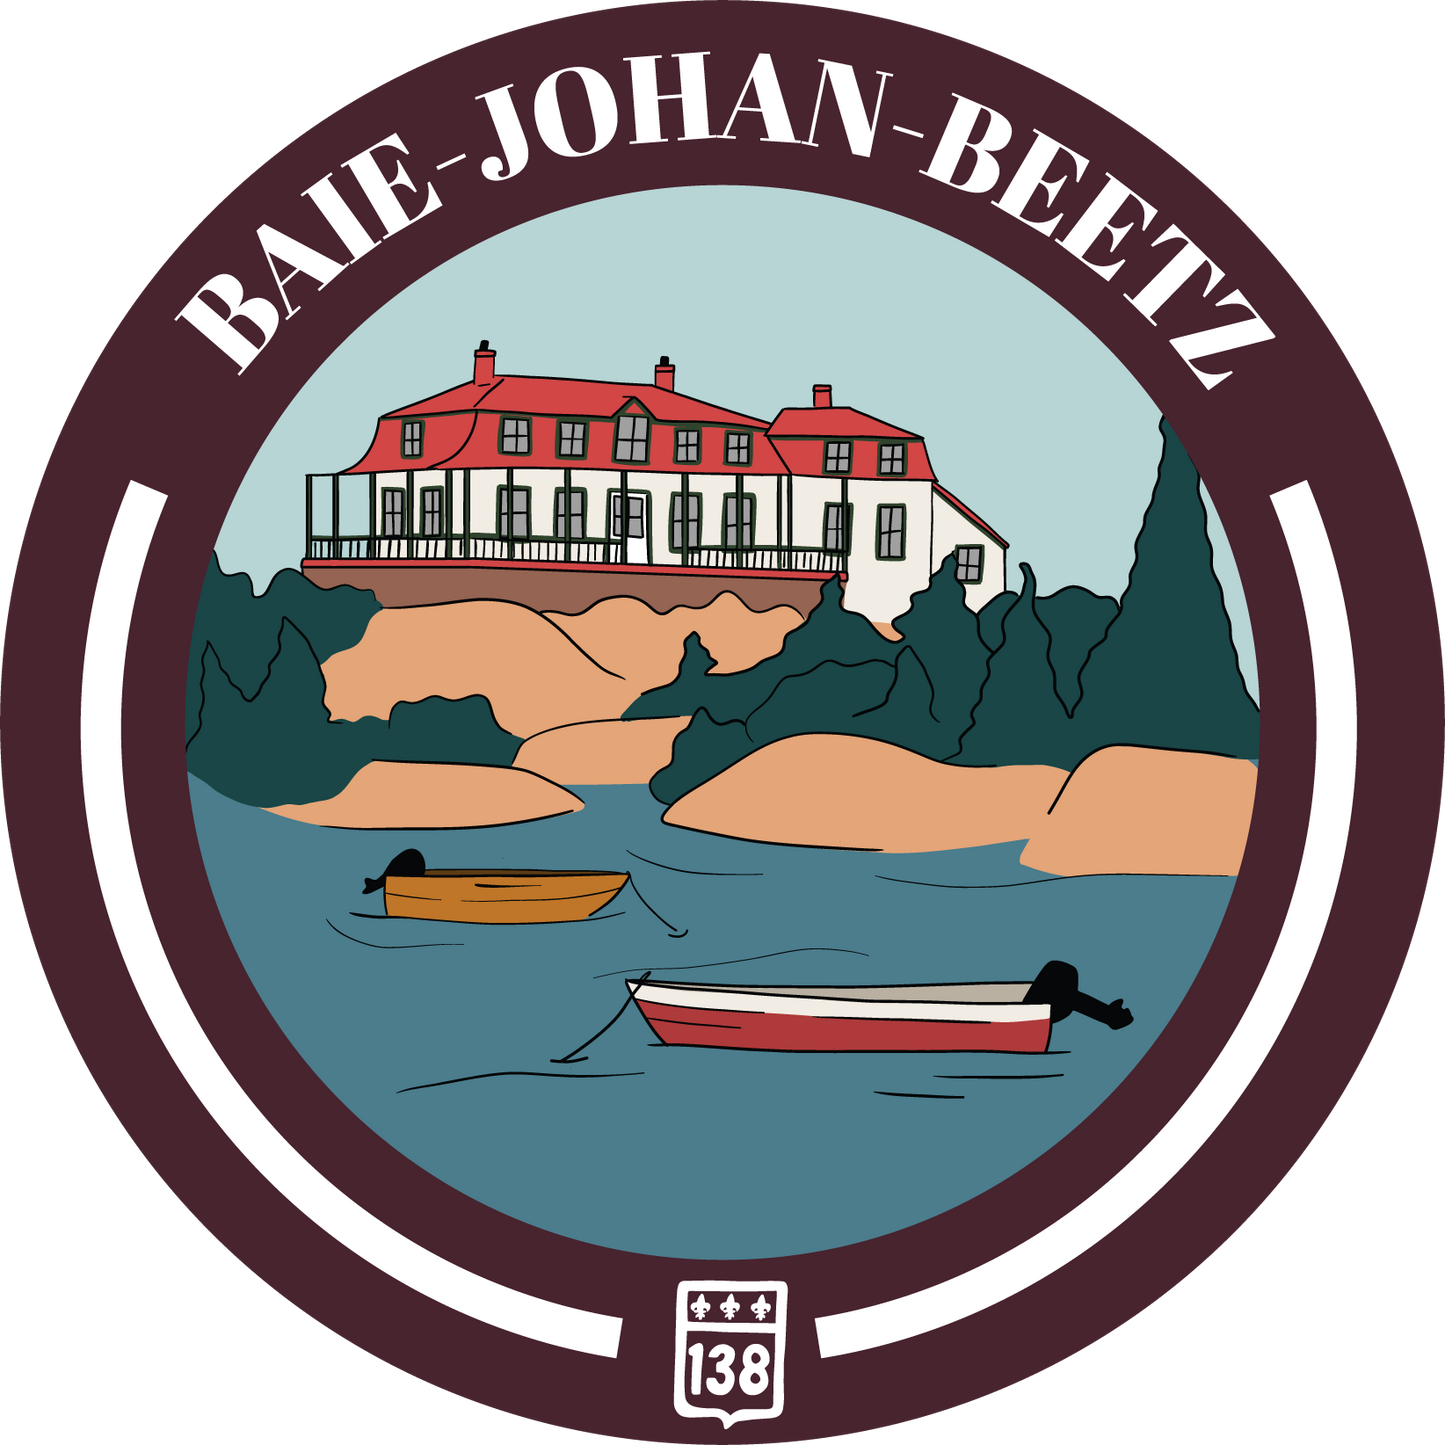 Autocollant Baie-Johan-Beetz